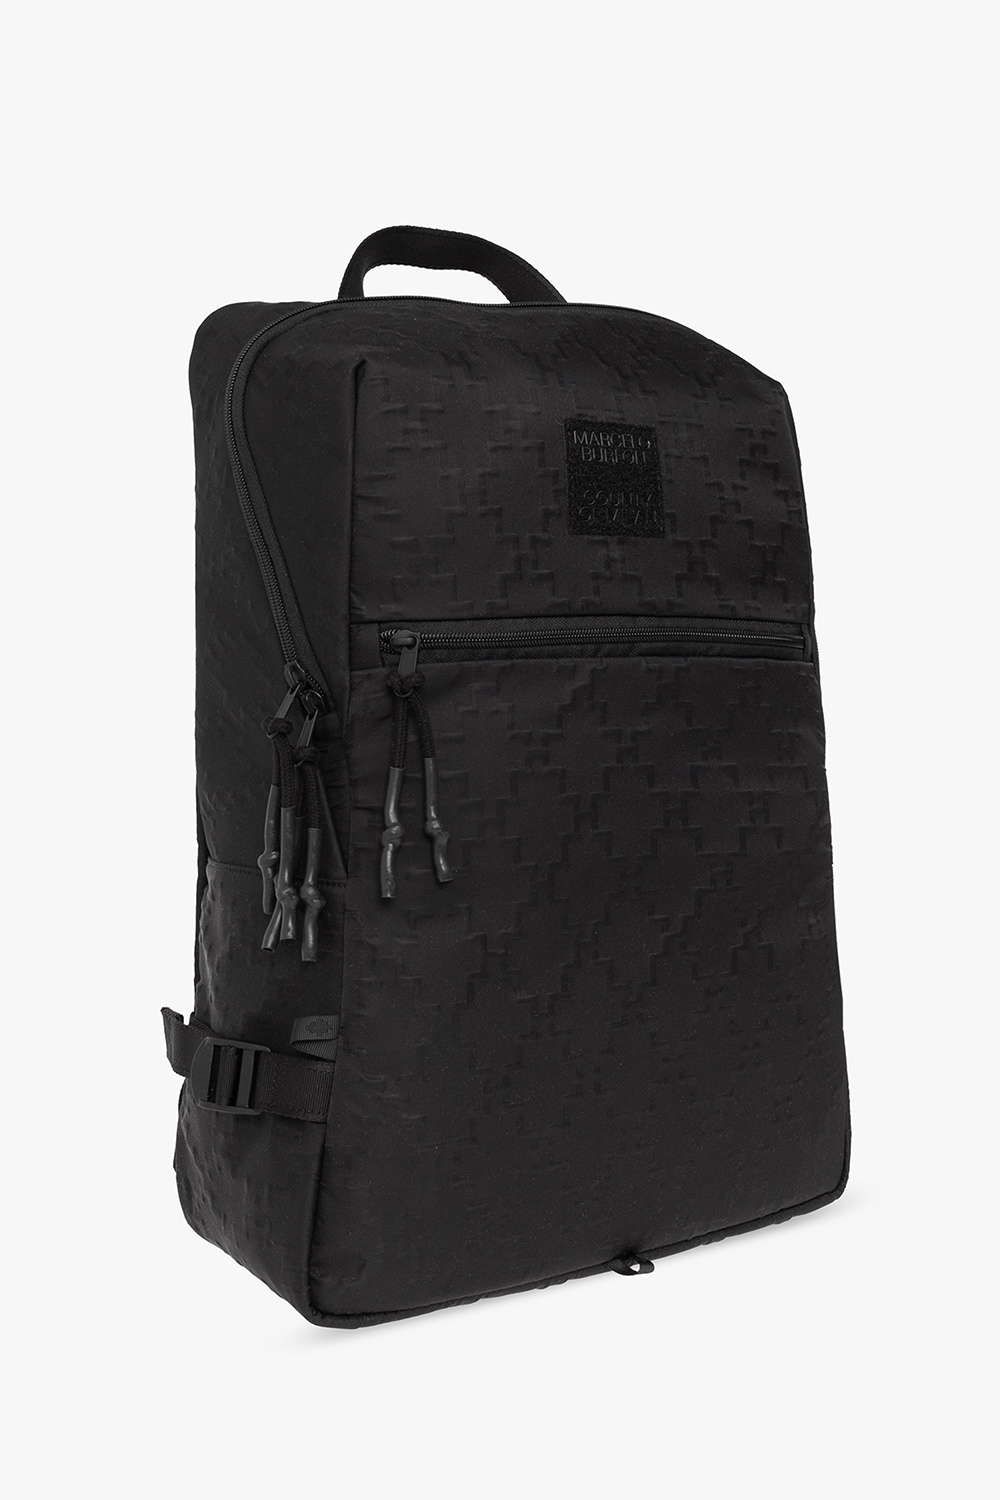 Marcelo Burlon Monogrammed backpack